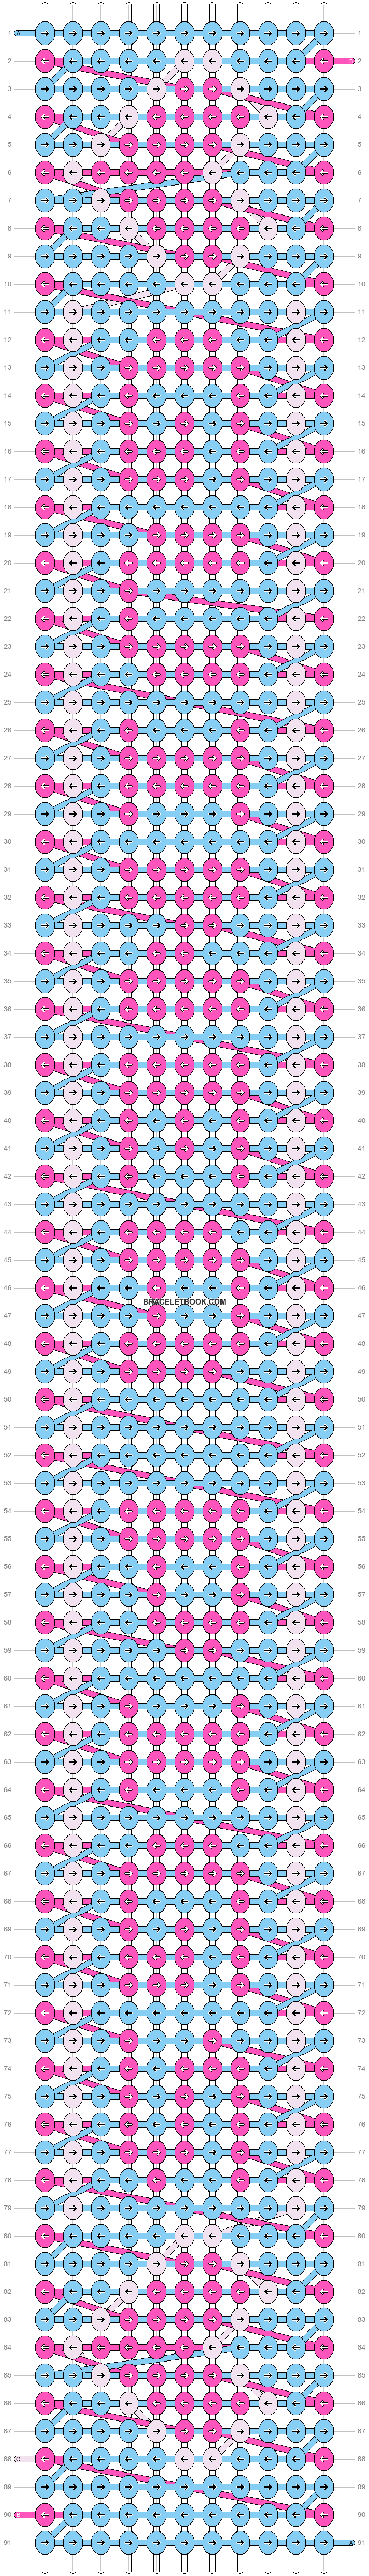 Alpha pattern #25725 variation #16160 pattern